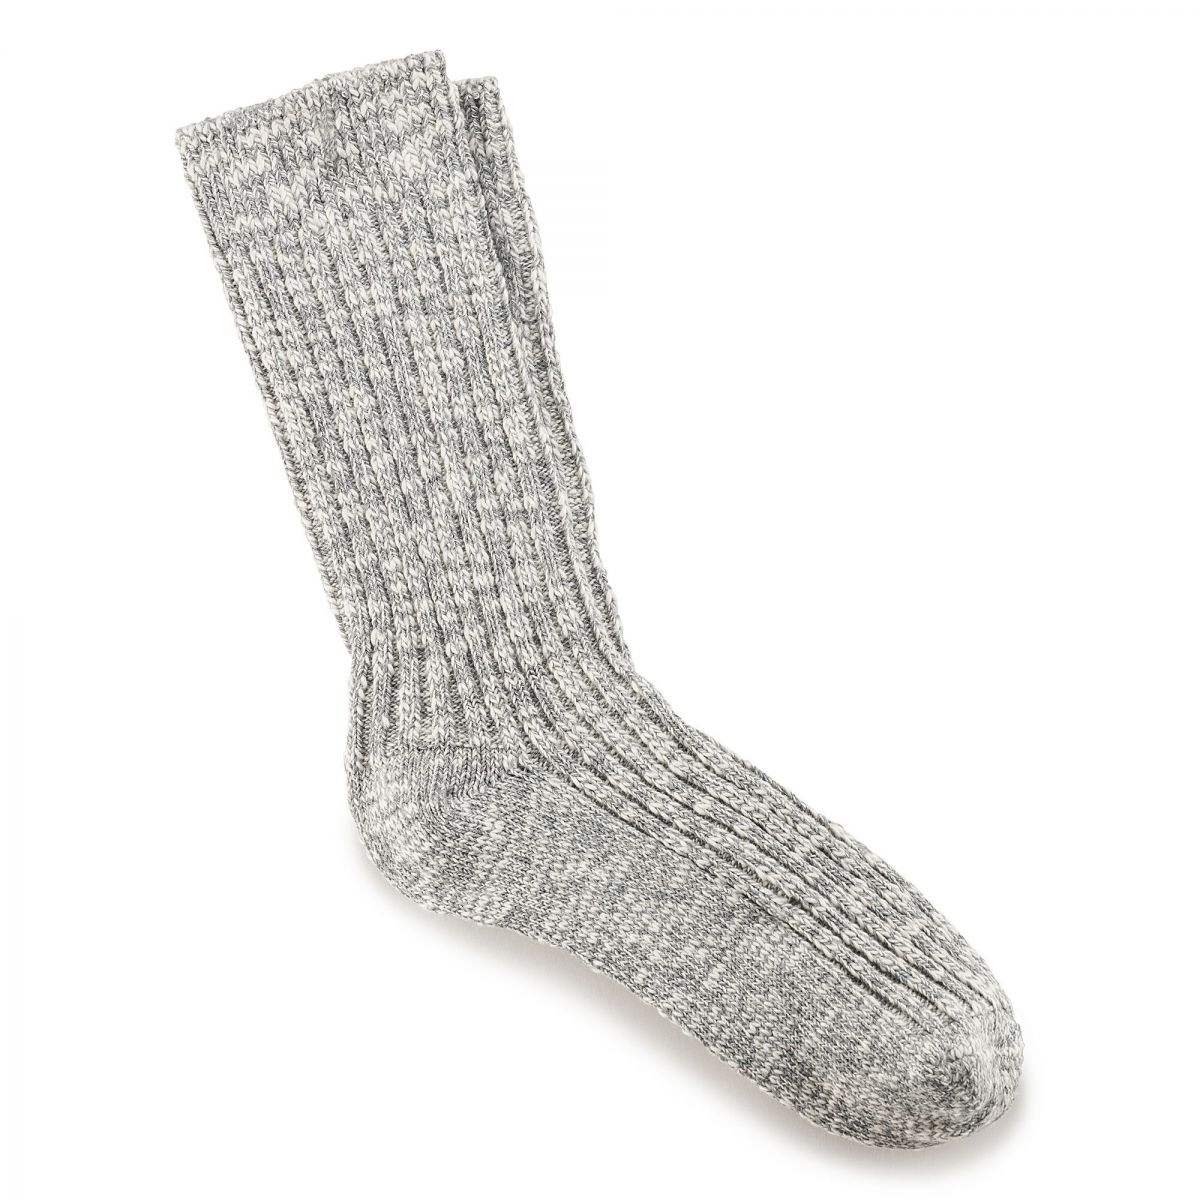 BIRKENSTOCK Men's Cotton Slub Socks Gray/White - 1008060 GRAY - GRAY, Large